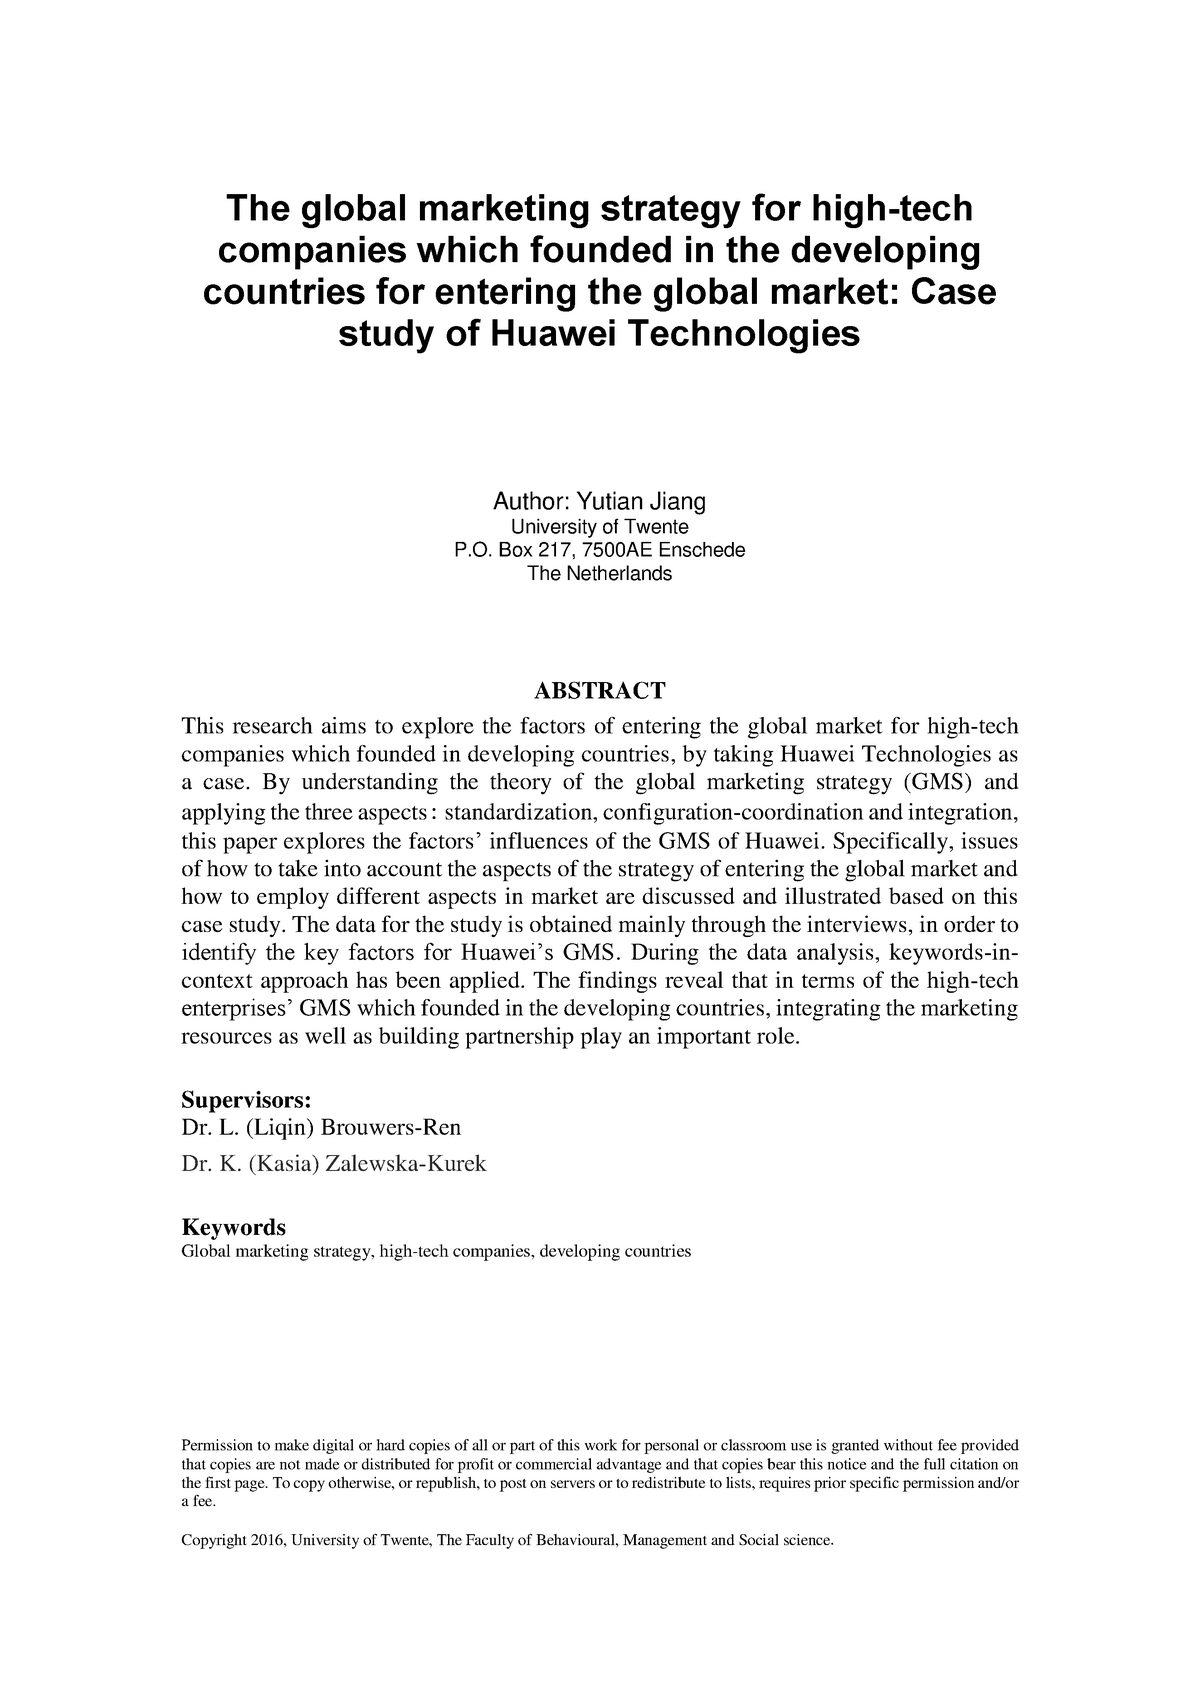 case study on global marketing